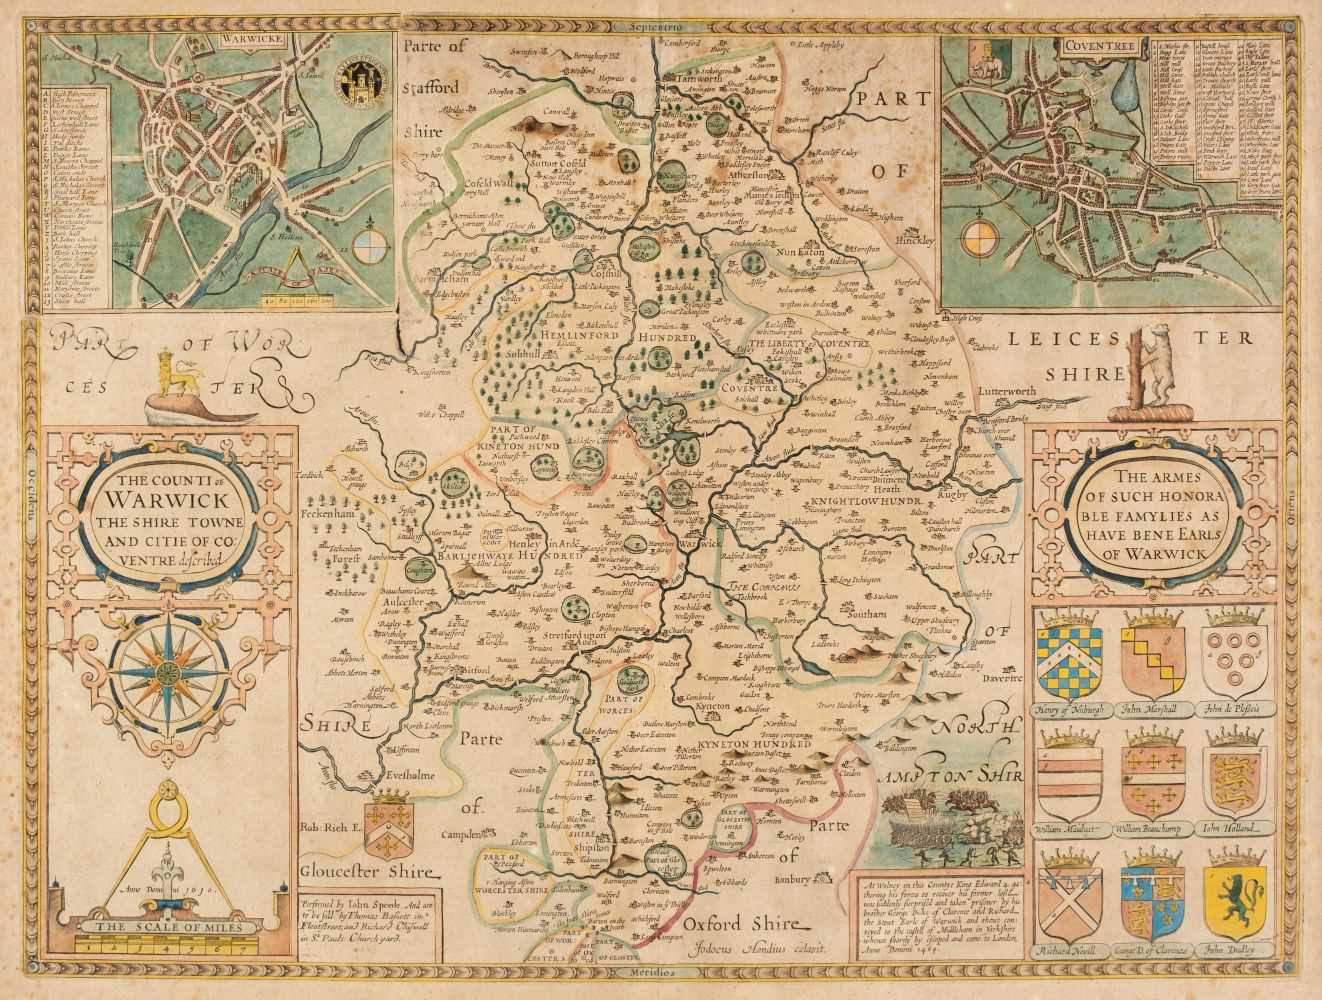 Lot 158 - Warwickshire. Speed (J.), The Counti of Warwick..., Thomas Bassett & Richard Chiswell, 1676